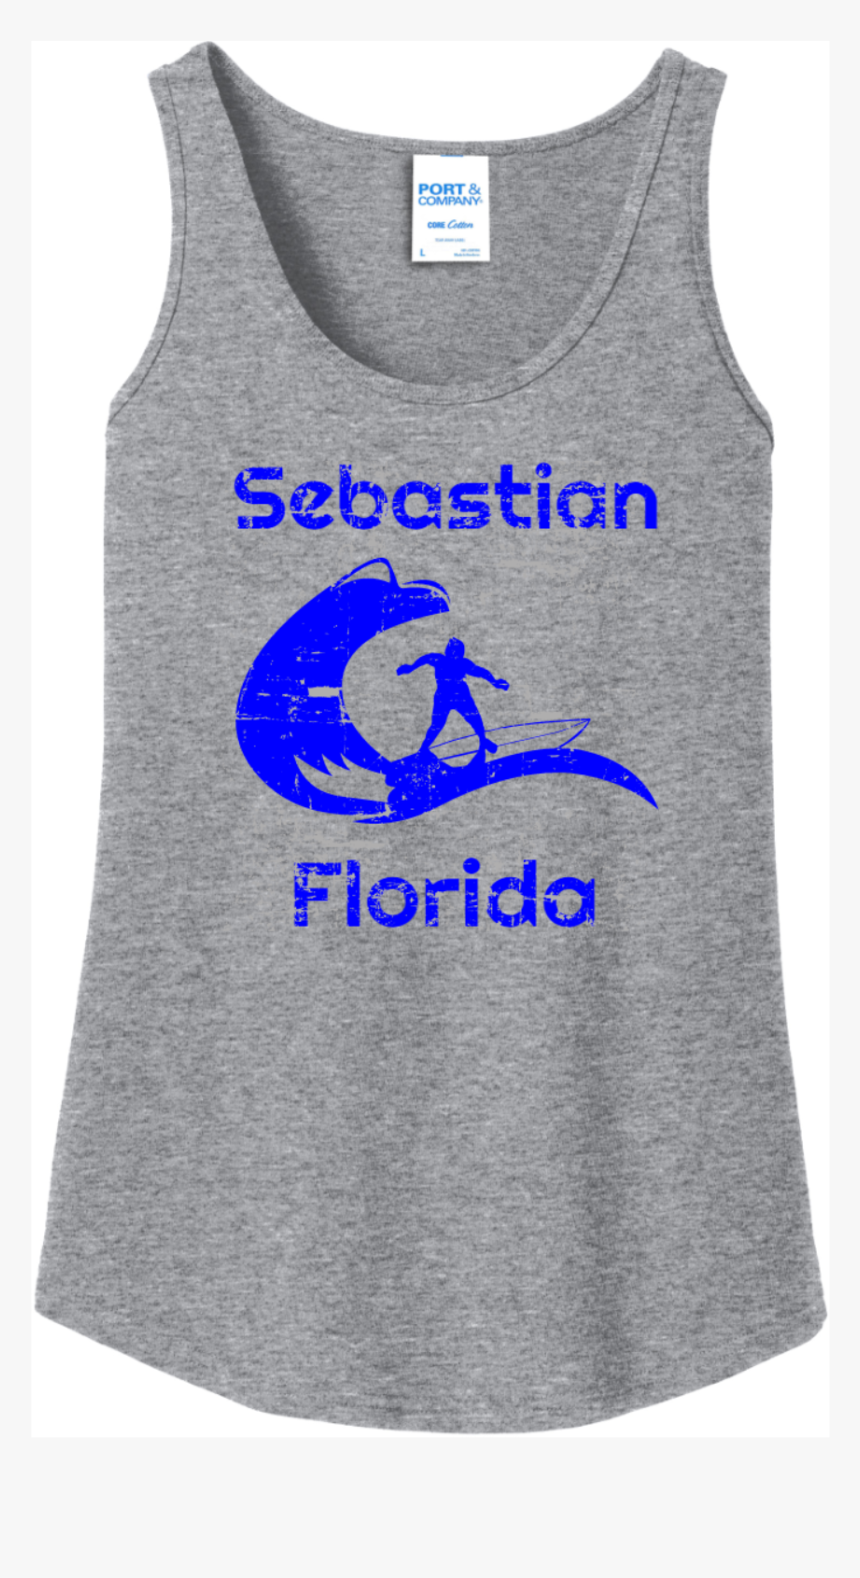 Sebastian Florida Surfing Tank Top For Women Athletic - Run Disney Shirt, HD Png Download, Free Download